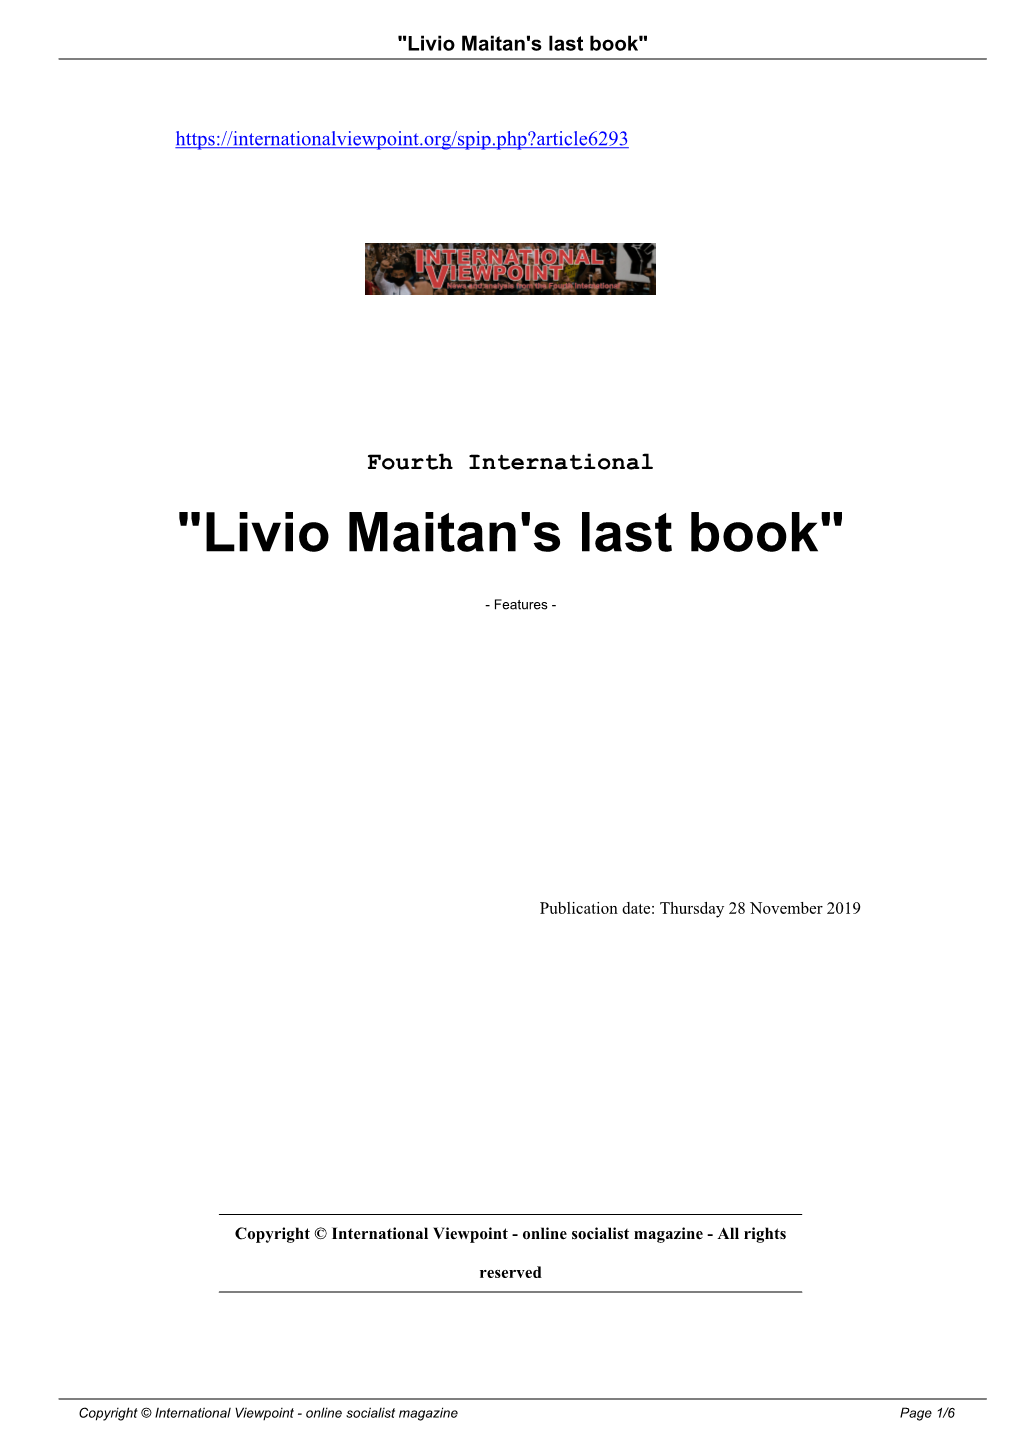 "Livio Maitan's Last Book"